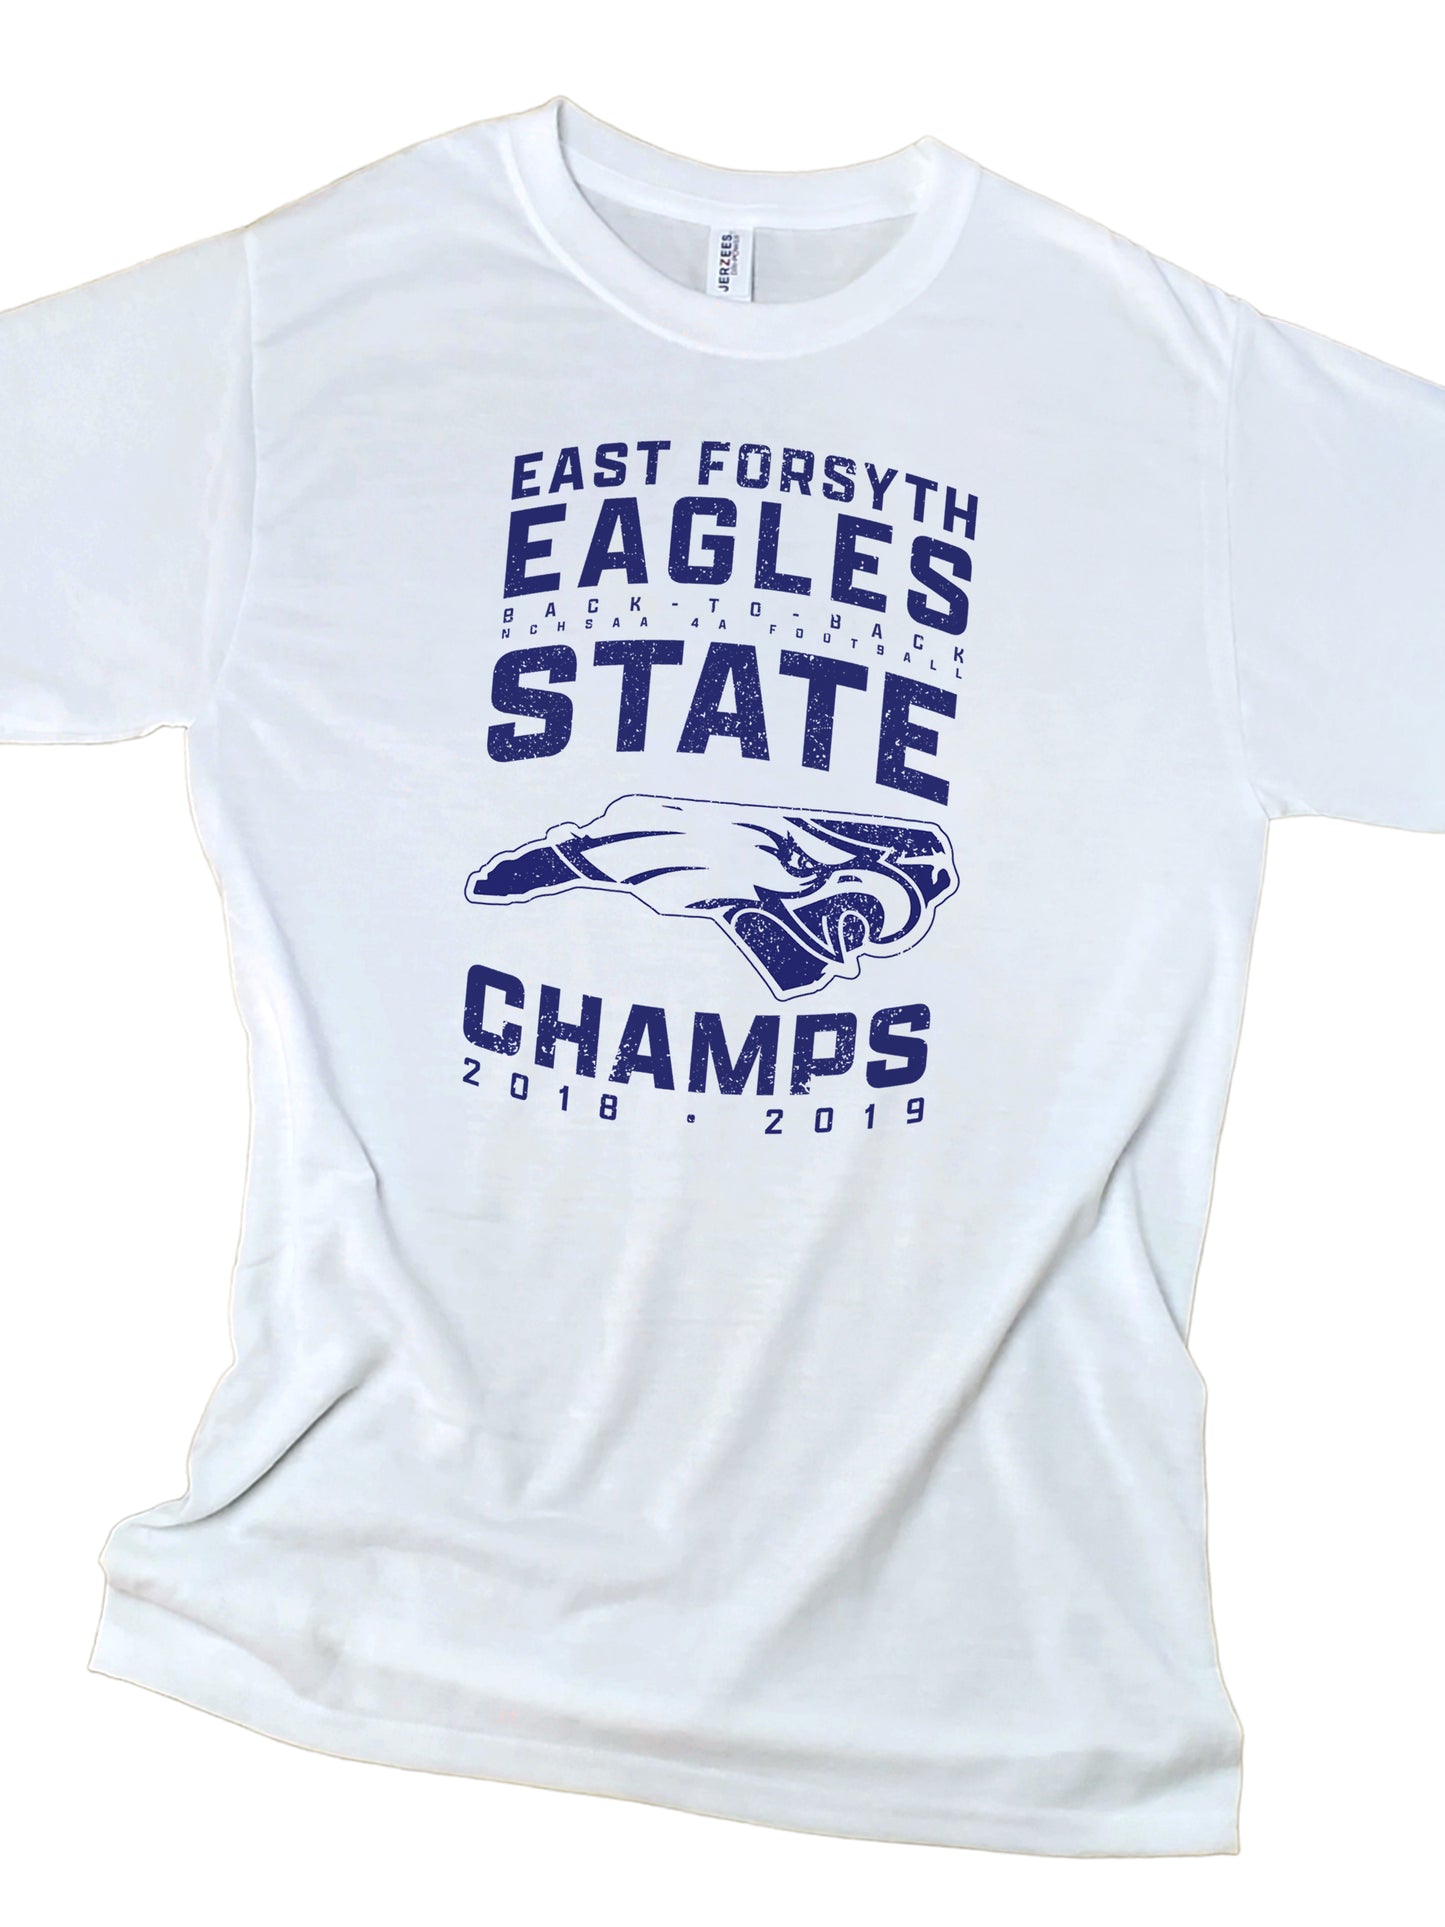 Eagles State Champ Tshirt, Eagles Spirit Wear, Back to back champs